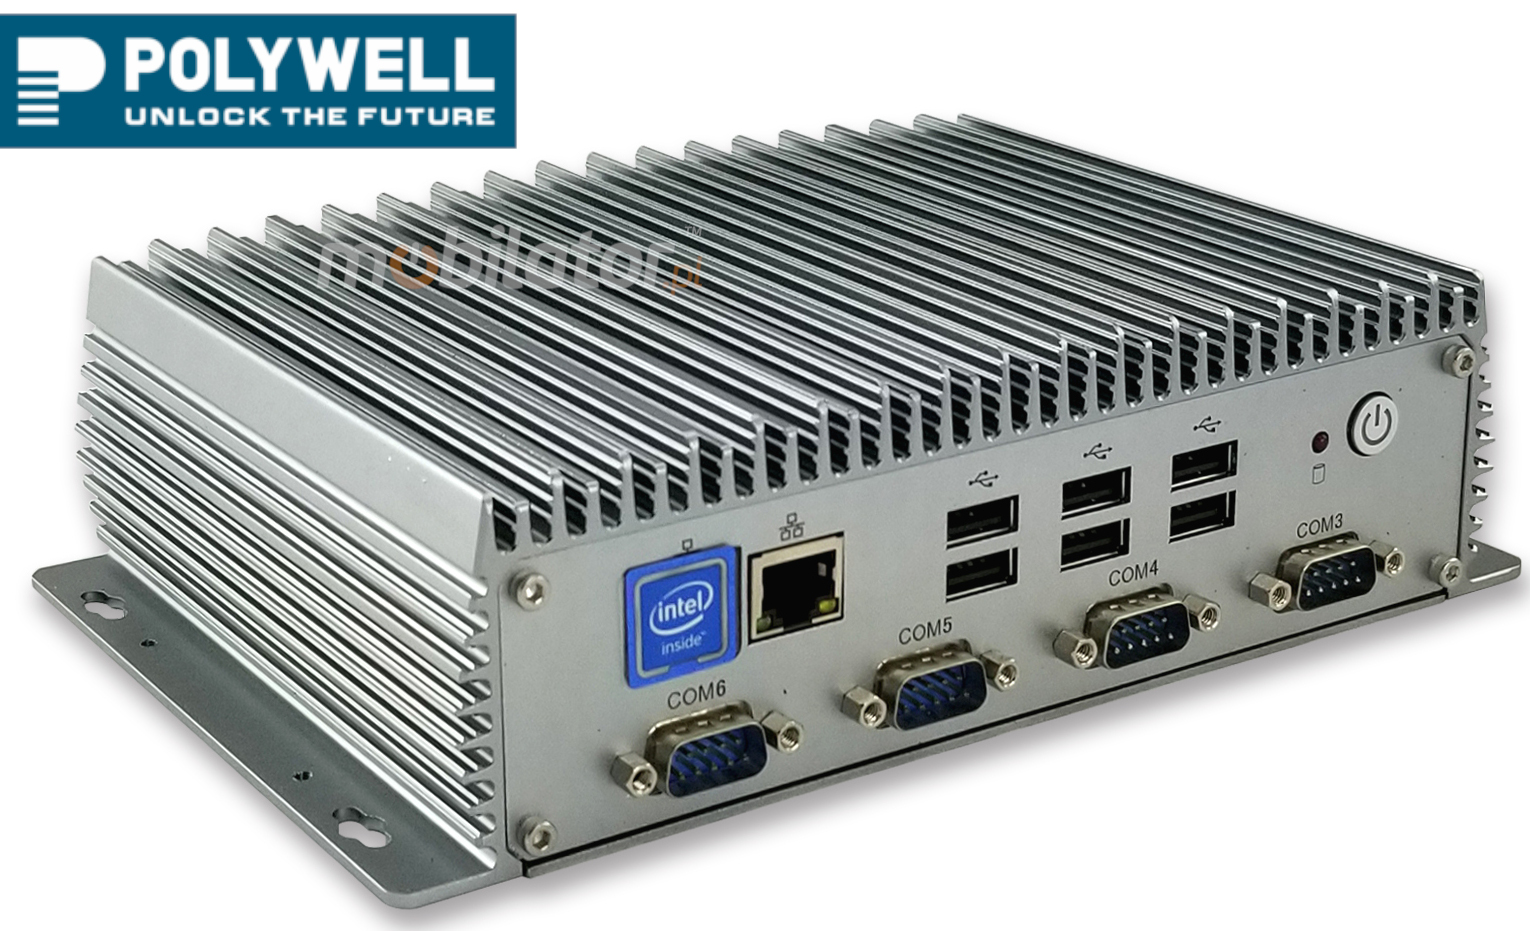 Polywell-Nano-U8FL2C6 Intel i3 small reliable fast and efficient mini pc